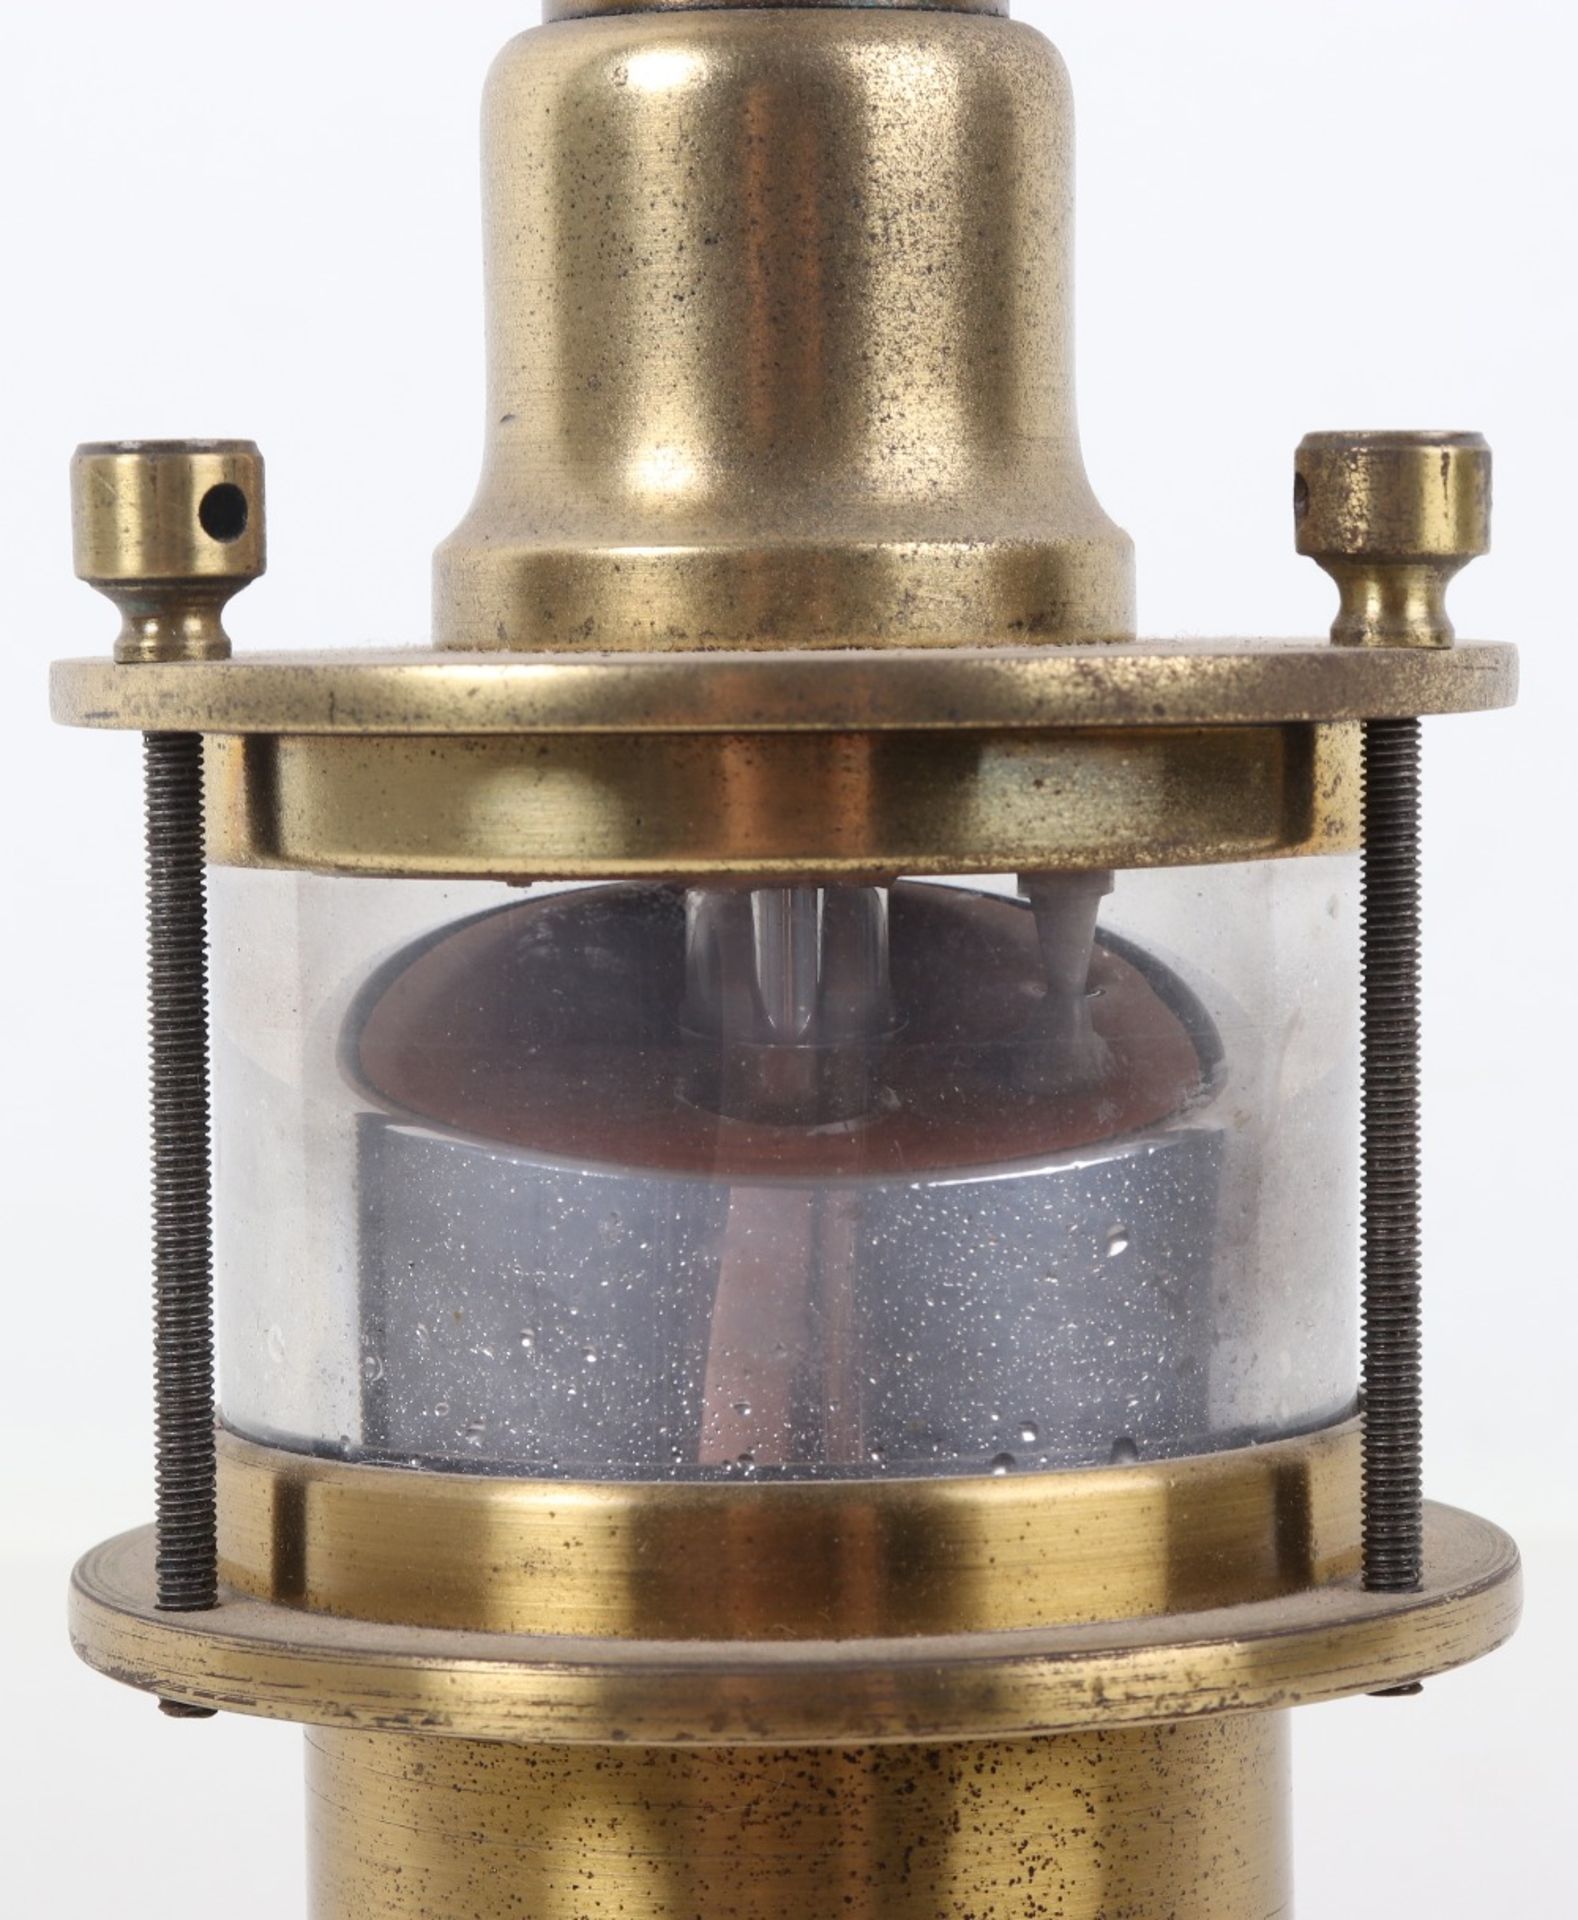 A 19th century brass marine or observatory barometer by Negretti & Zambra, No. 1213 - Image 5 of 7